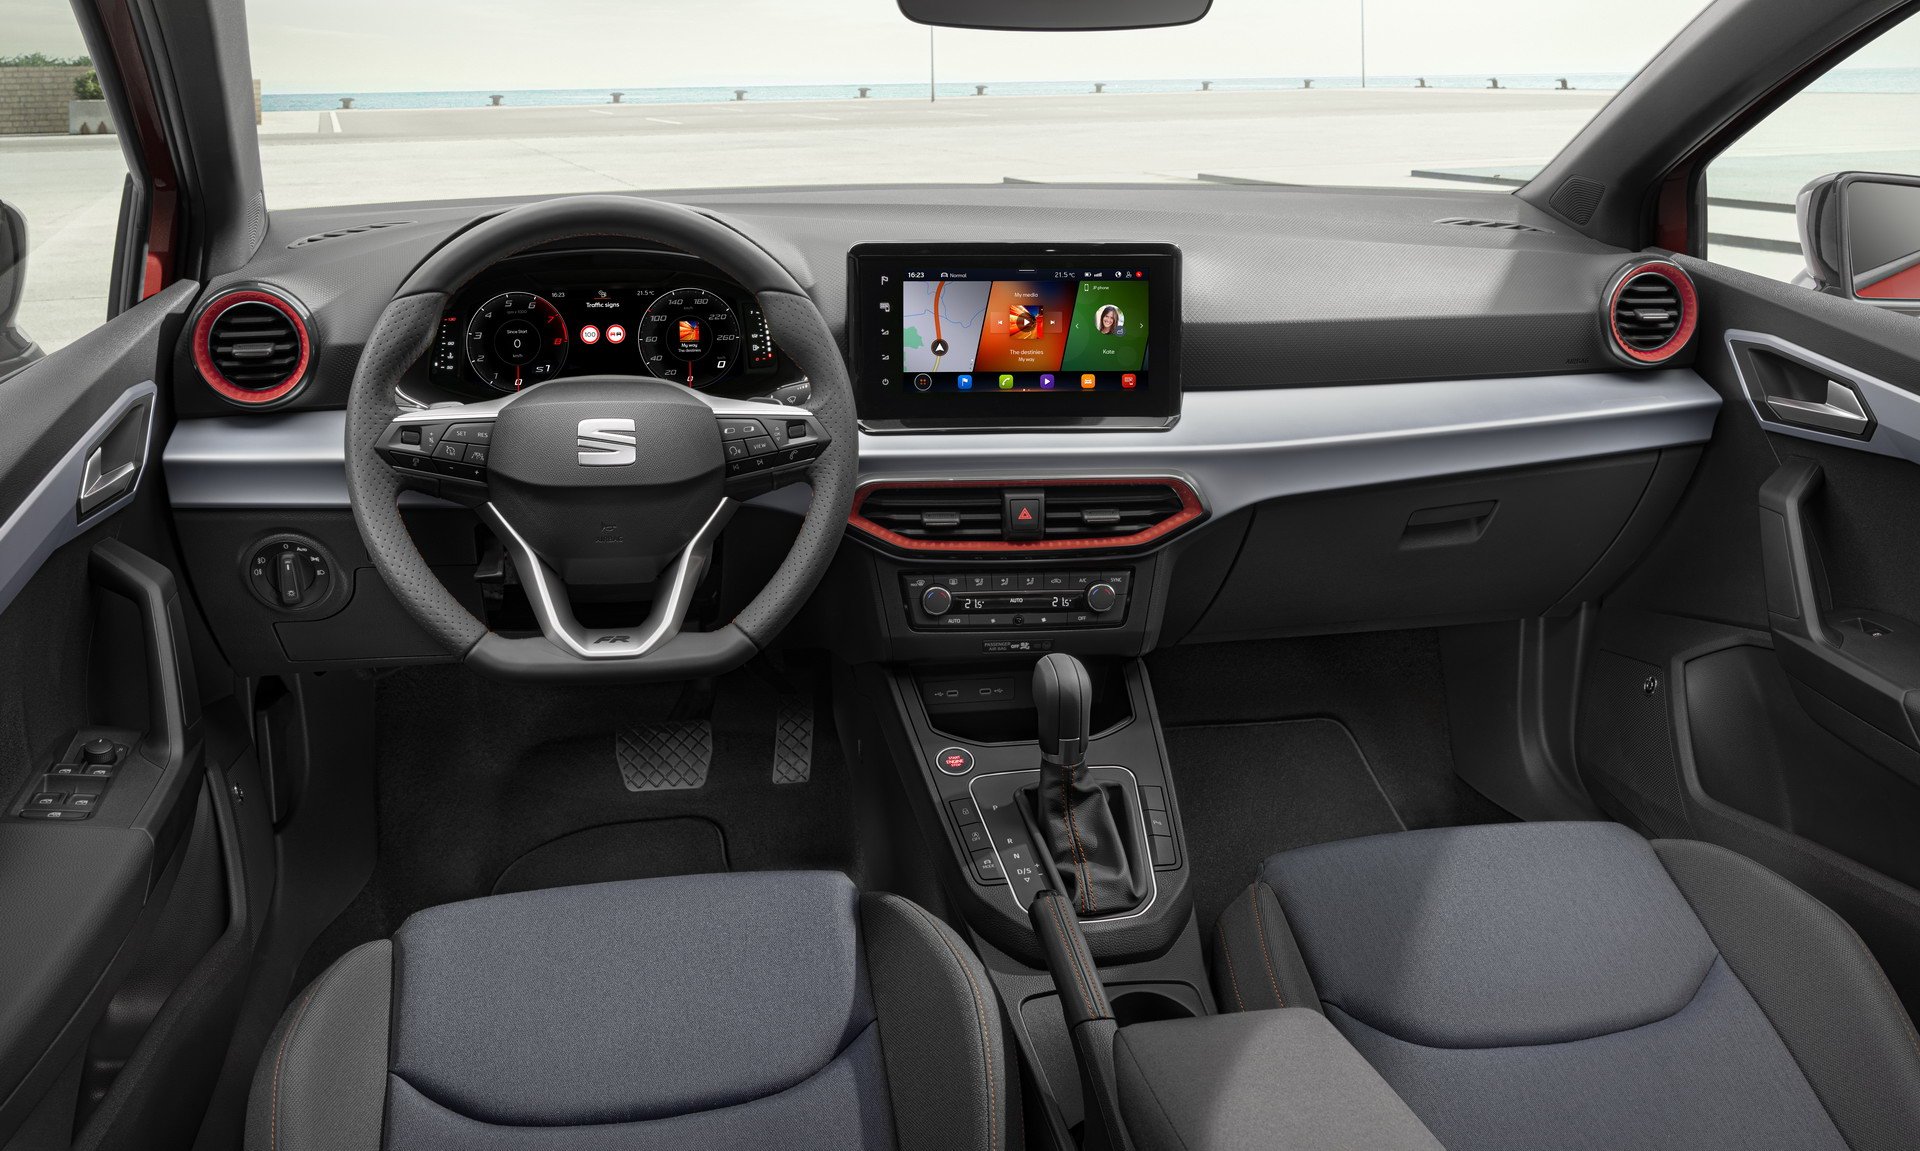 Seat Ibiza interior - Cockpit